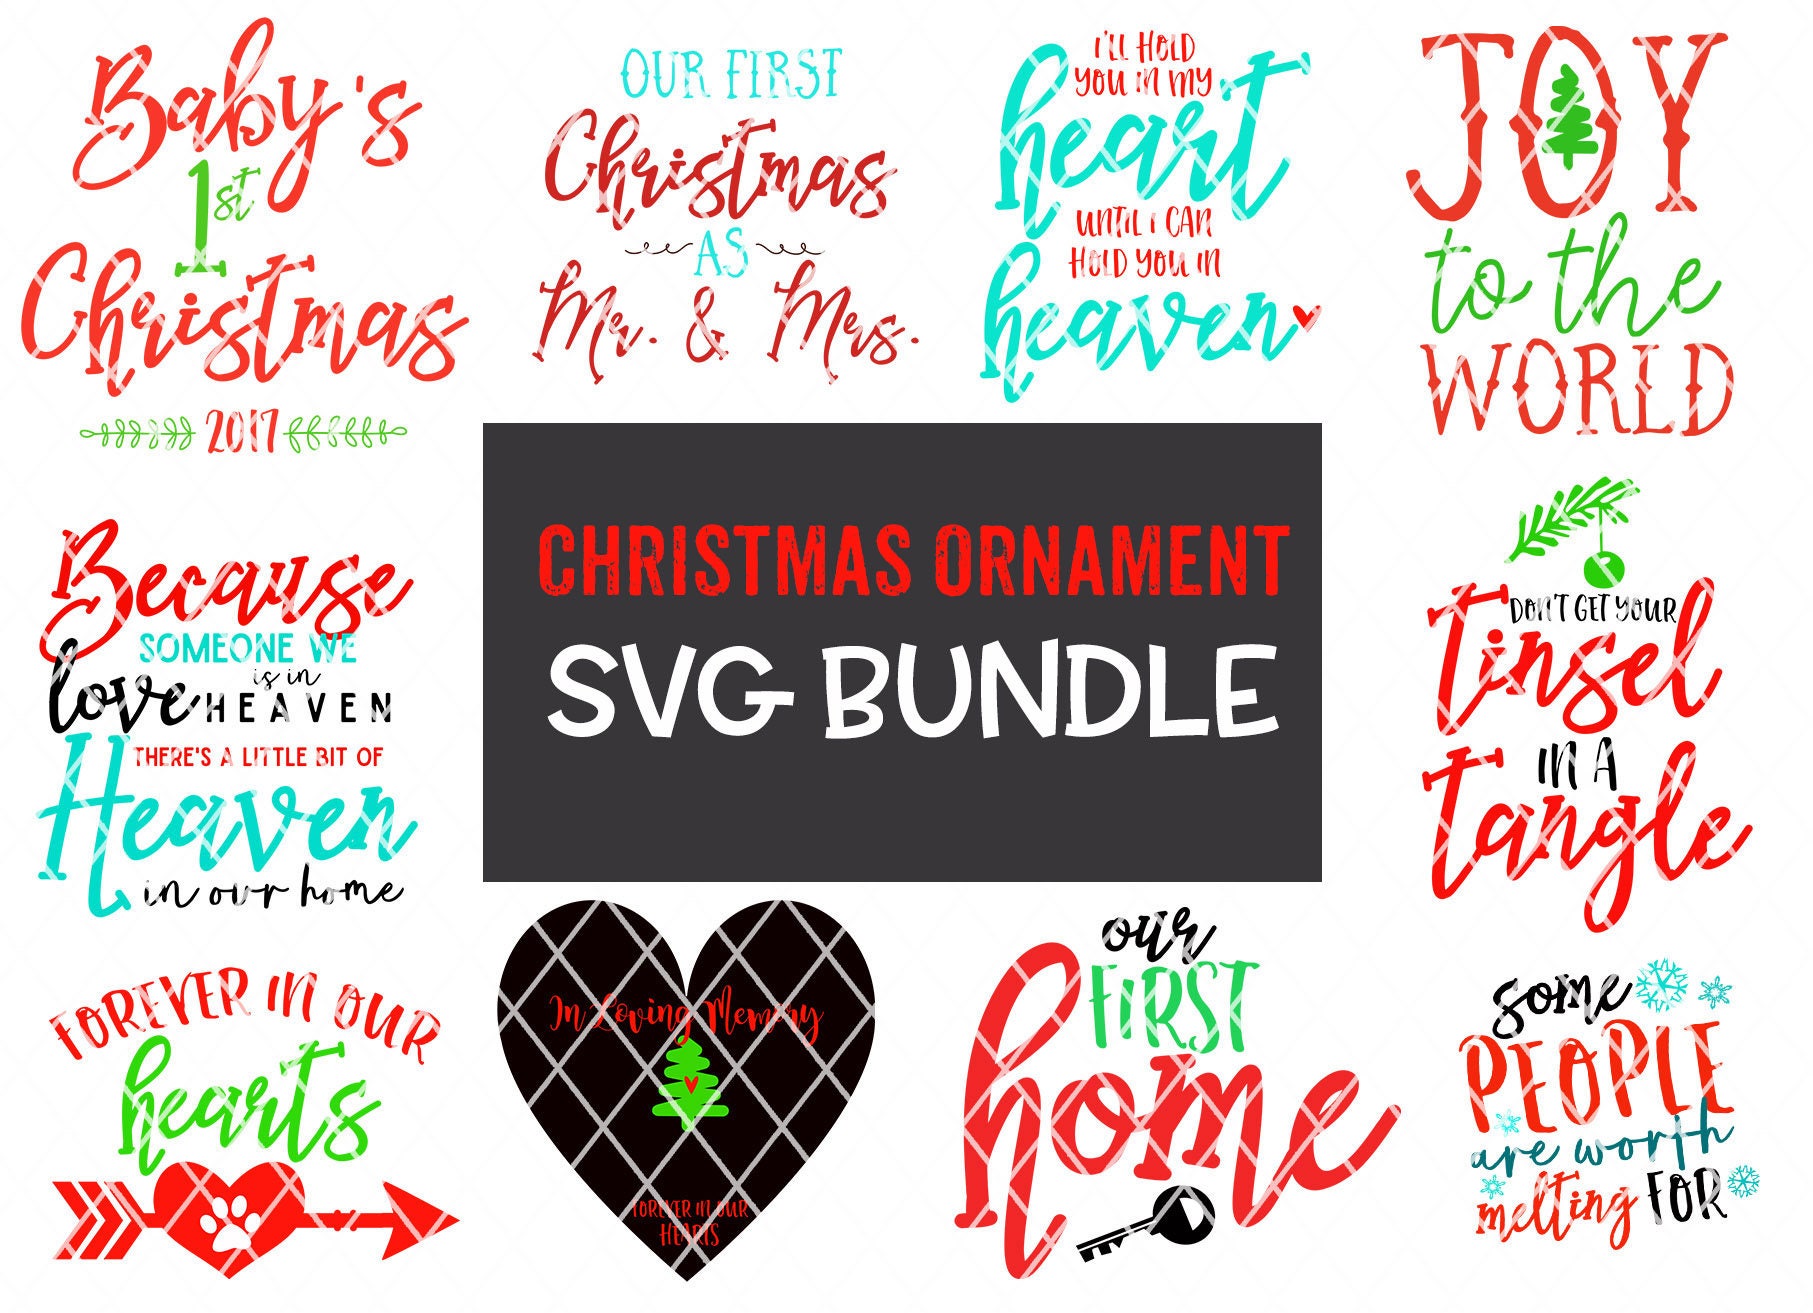 Christmas Ornament SVG Design Bundle August 2017 Release